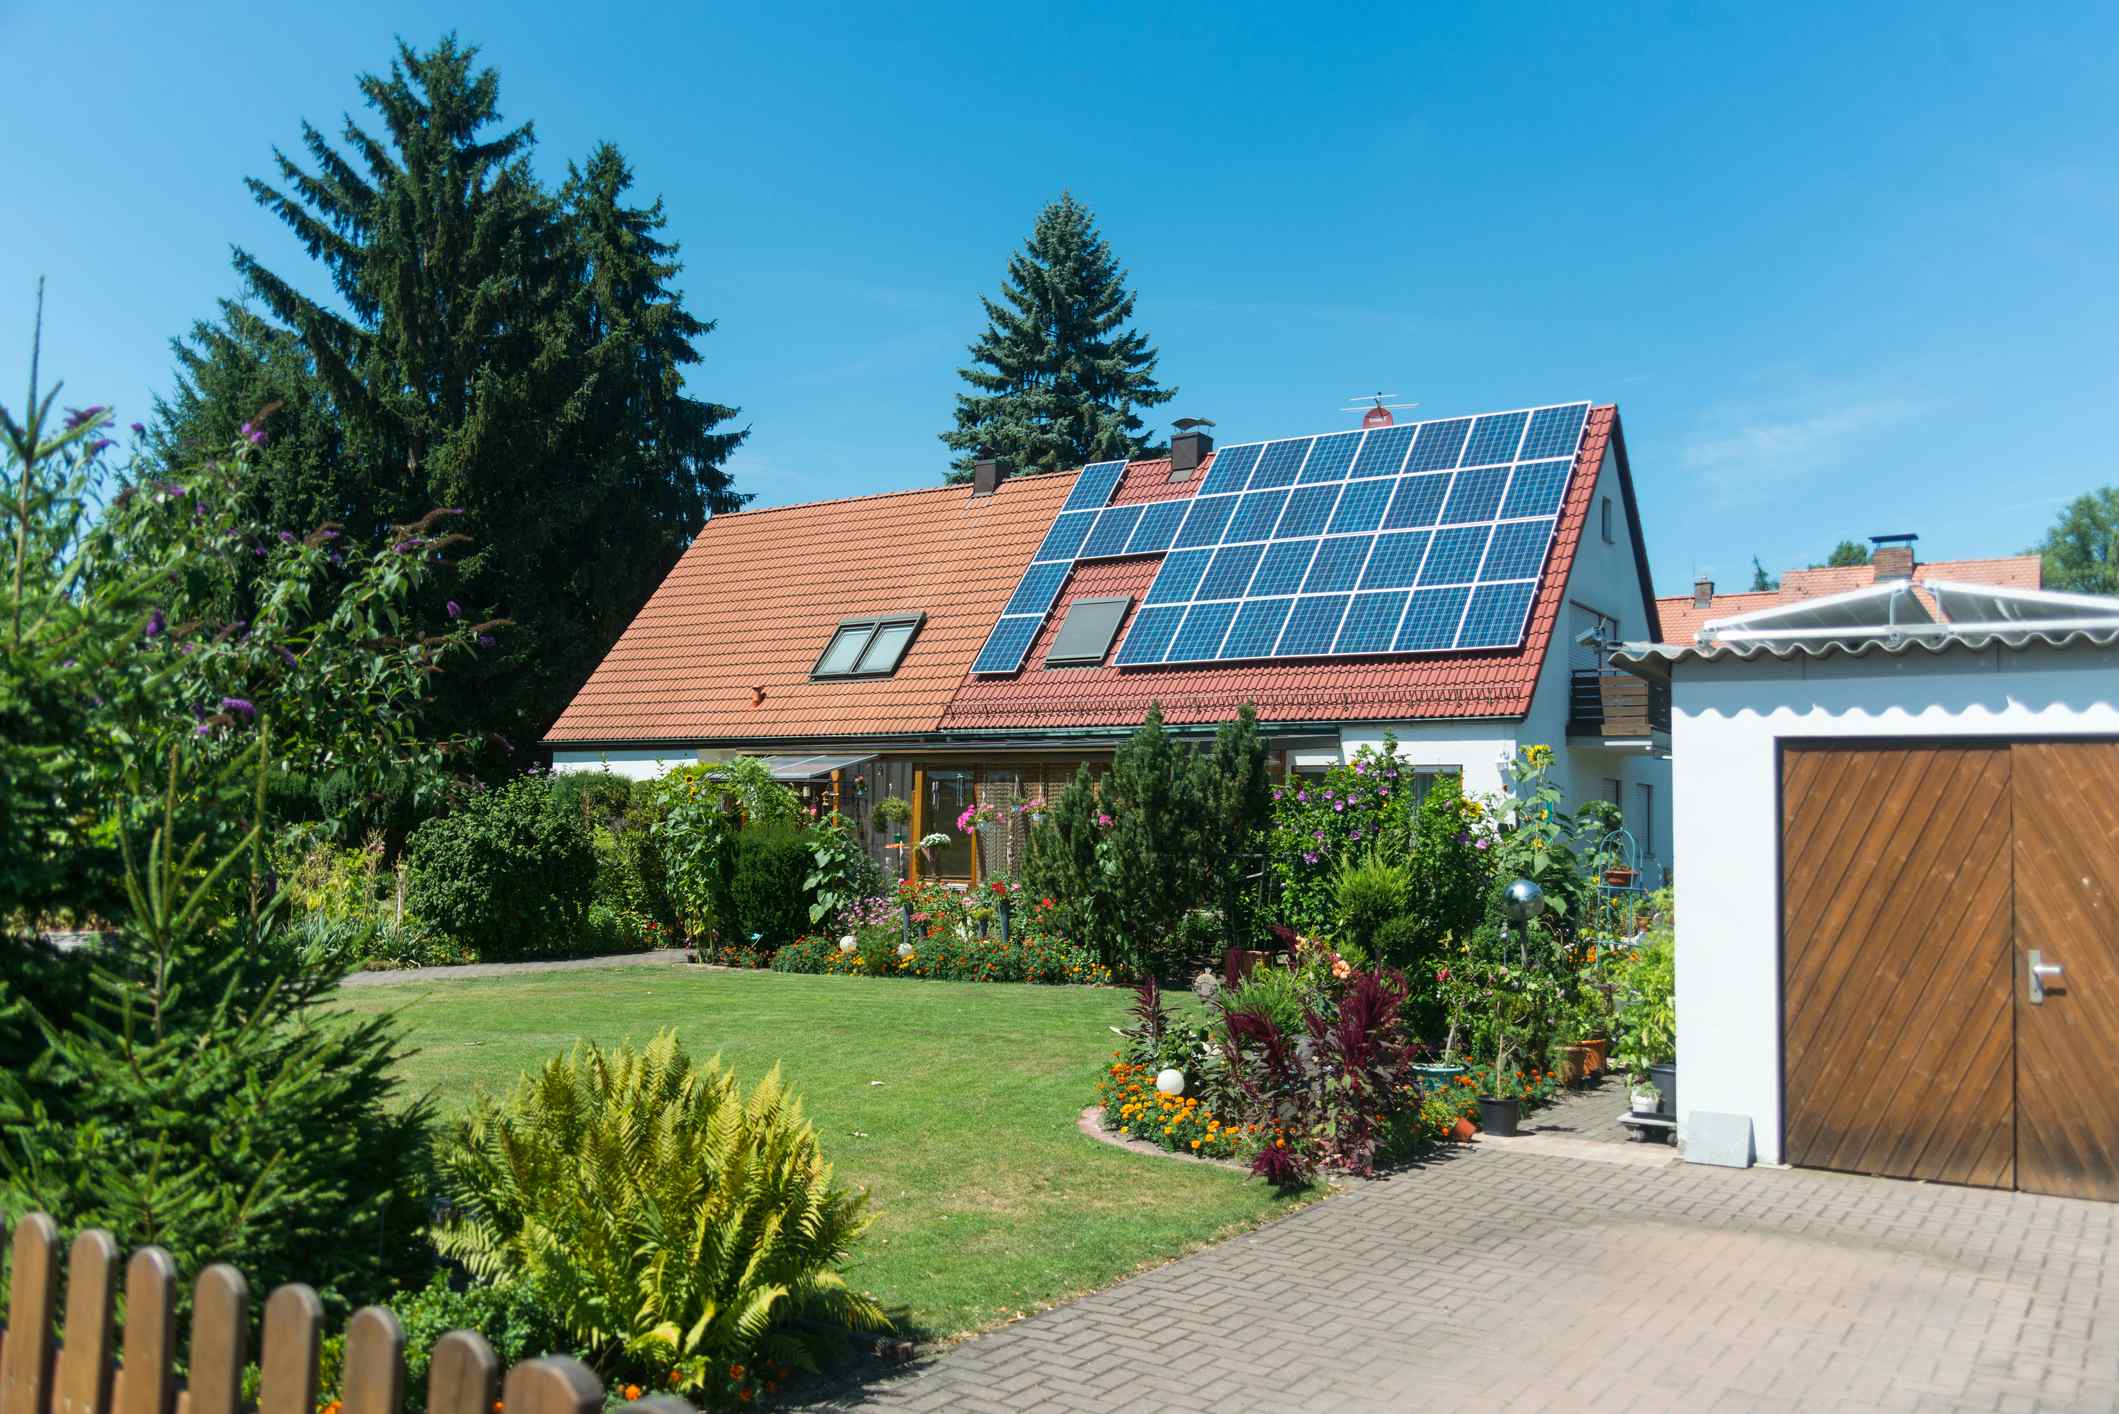 Blog Hero: How to Install Solar Panels